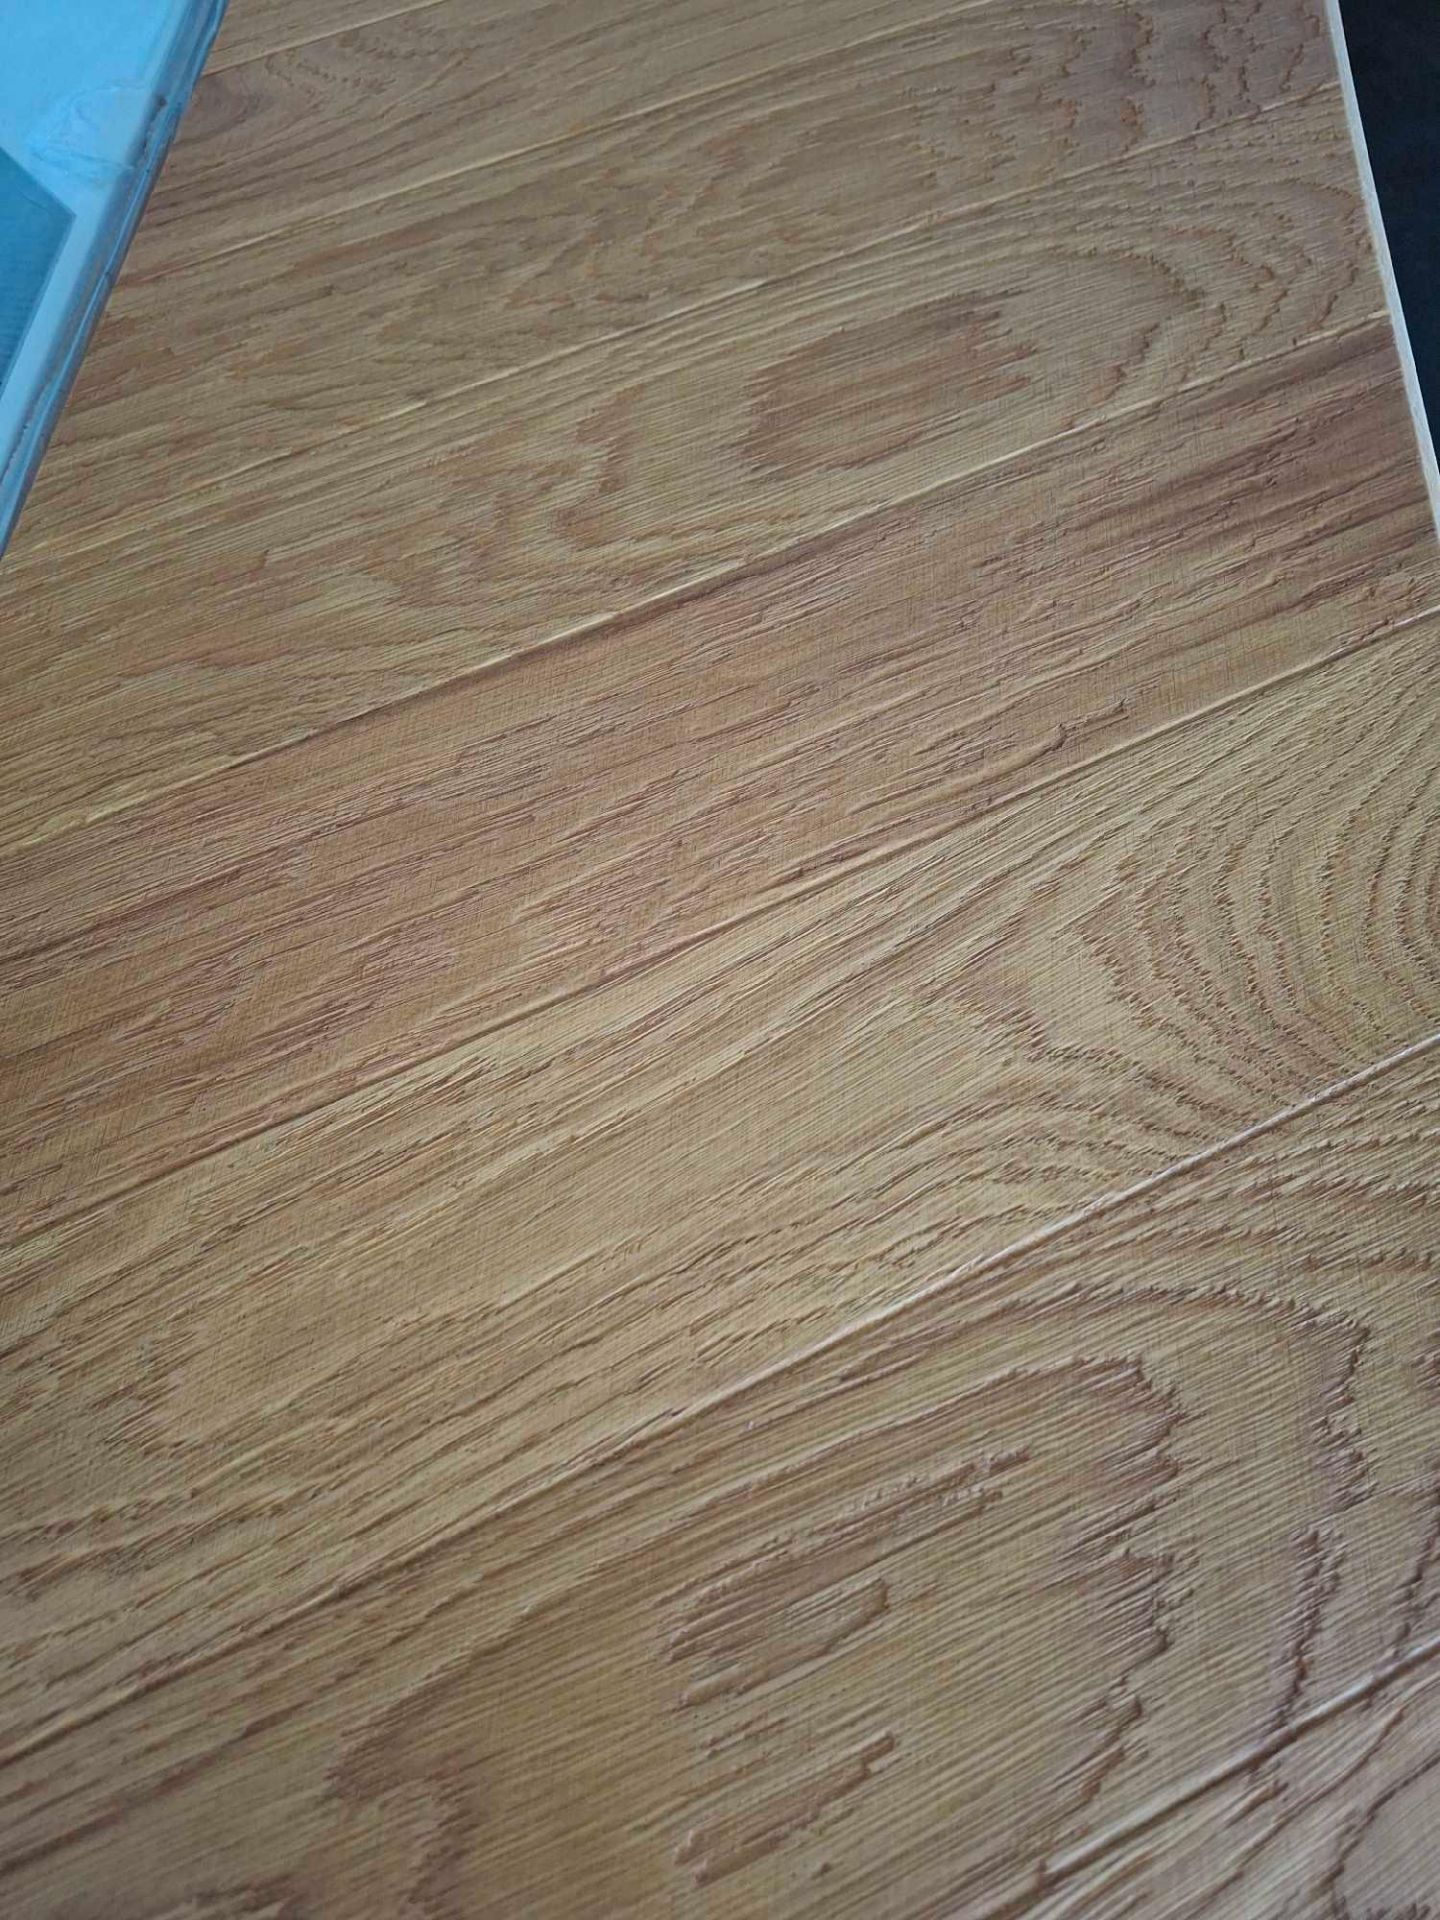 5 Packs of KÃ¤hrs Wood Flooring Chevron Light Brown Oiled 1848mm x 305mm x 15mm Per Plank 4 Per Pack - Image 3 of 5